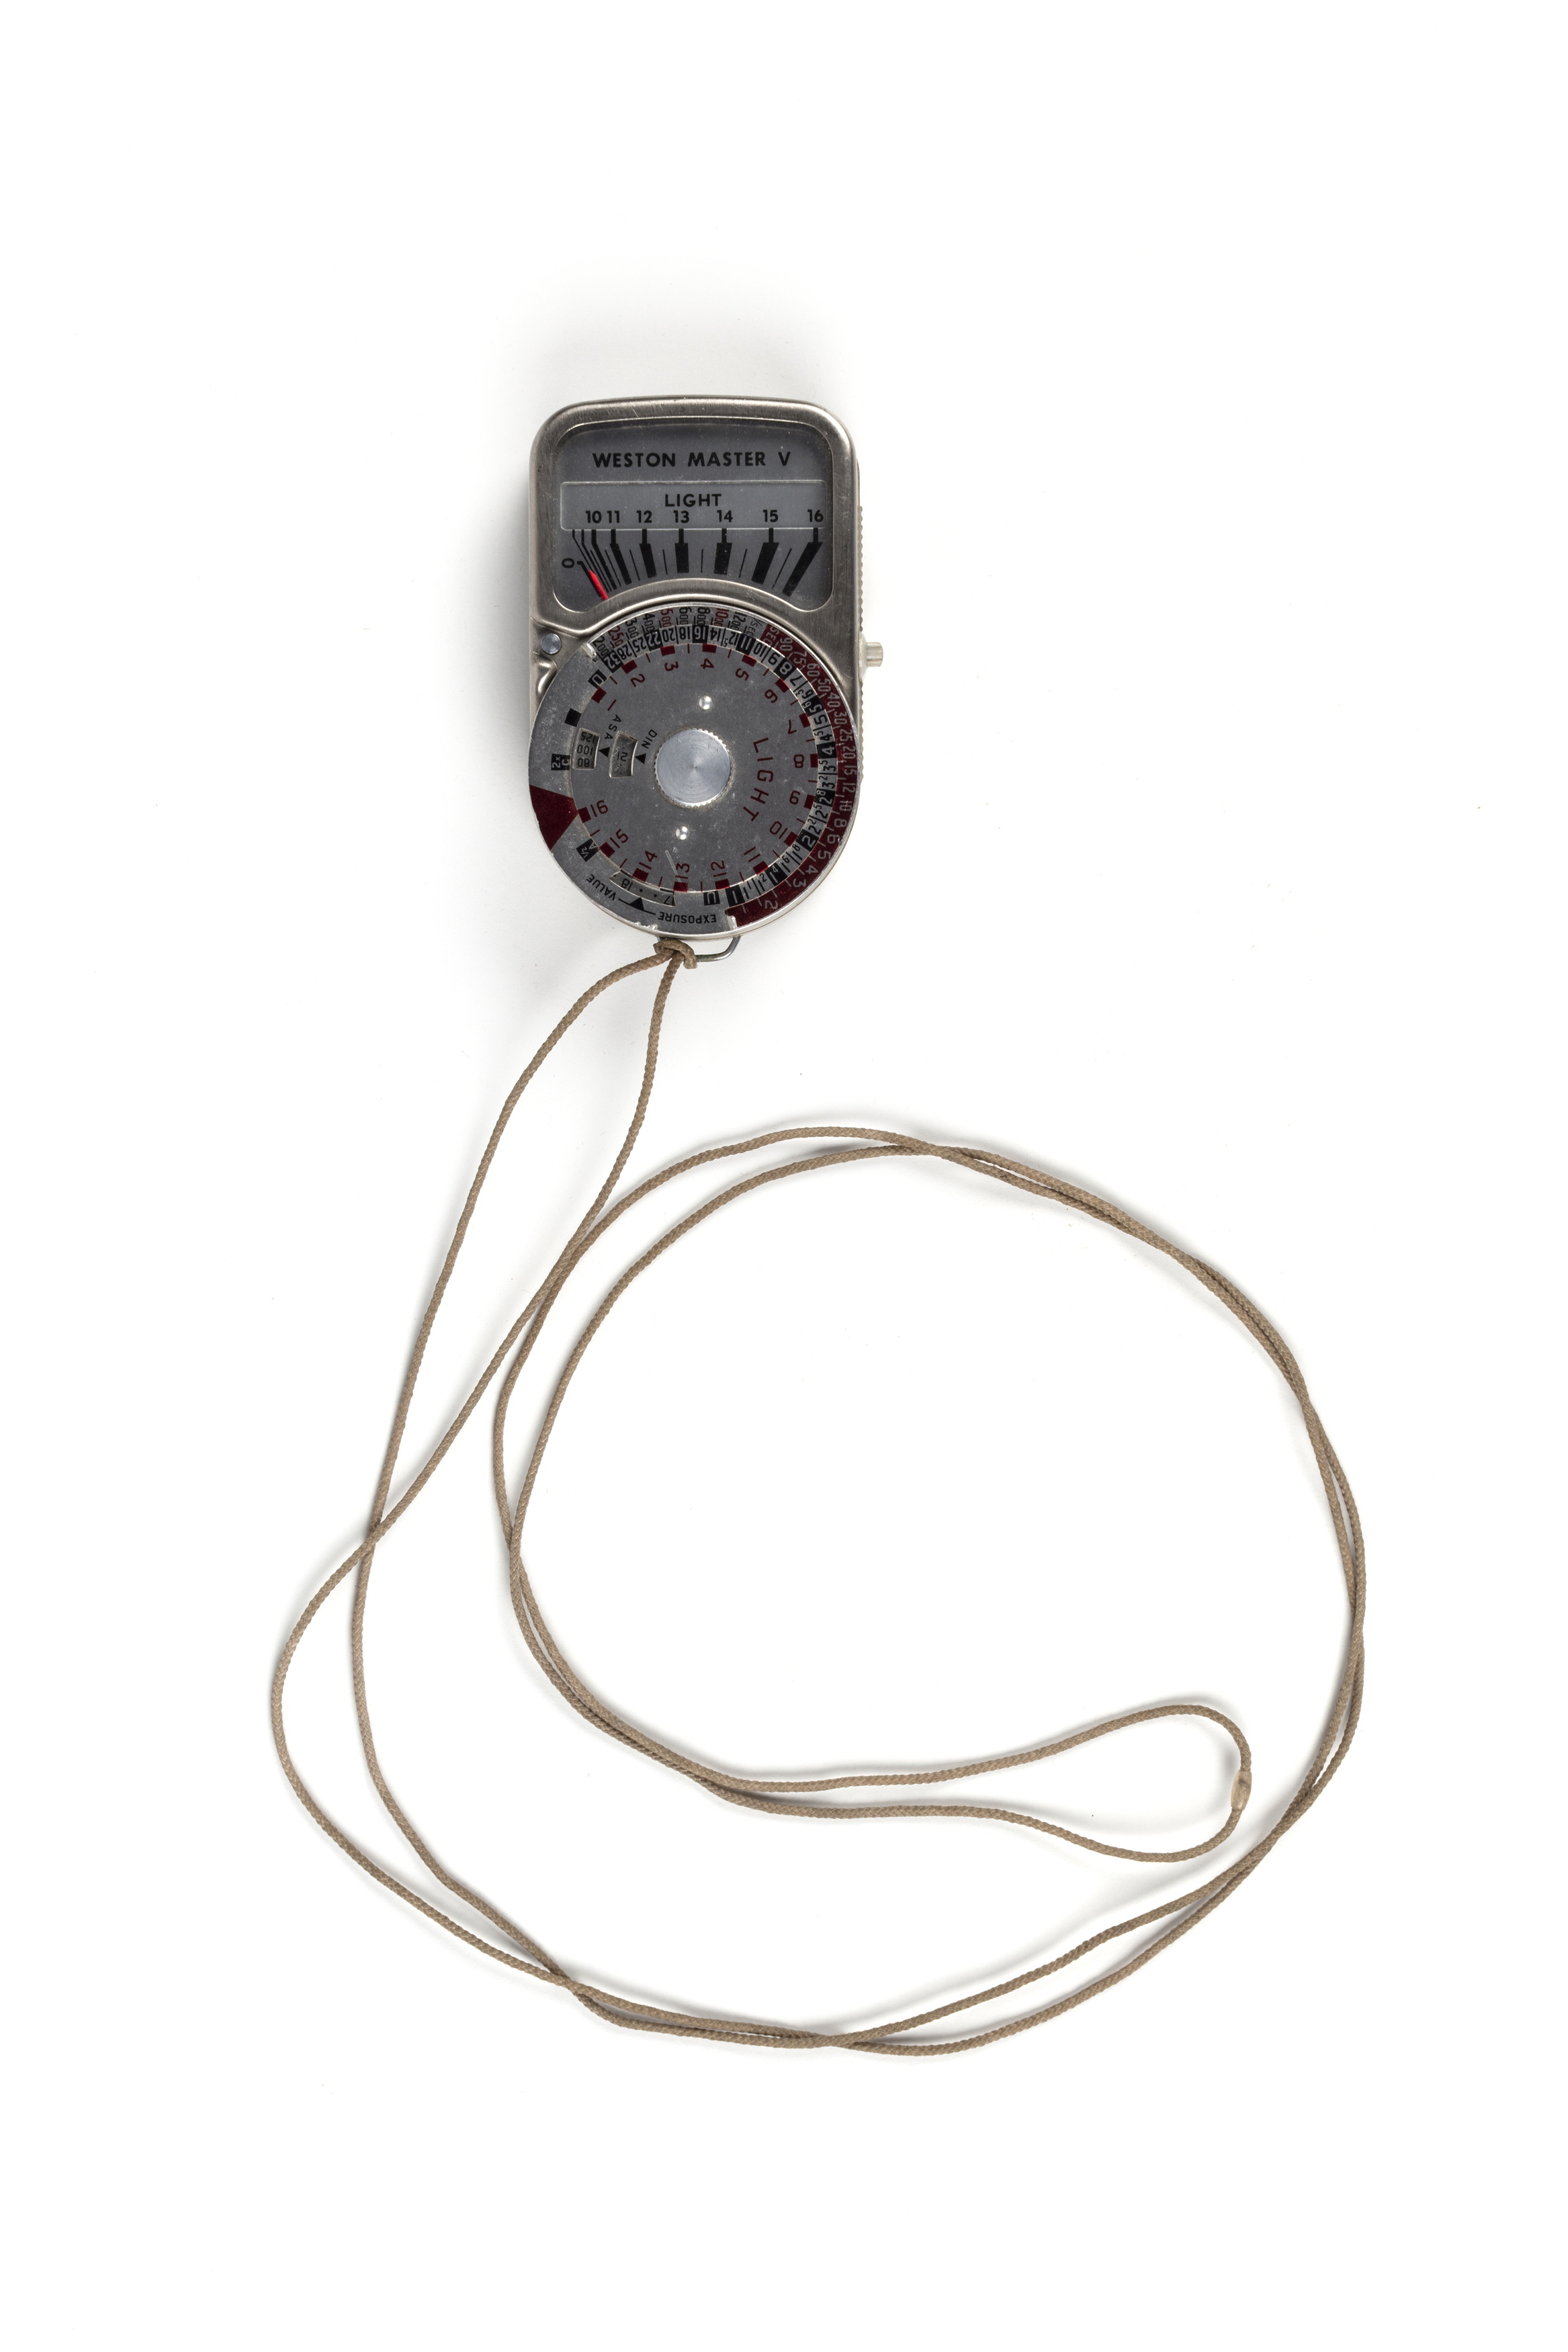 Exposure meter, 'Weston Master V', model S461-5